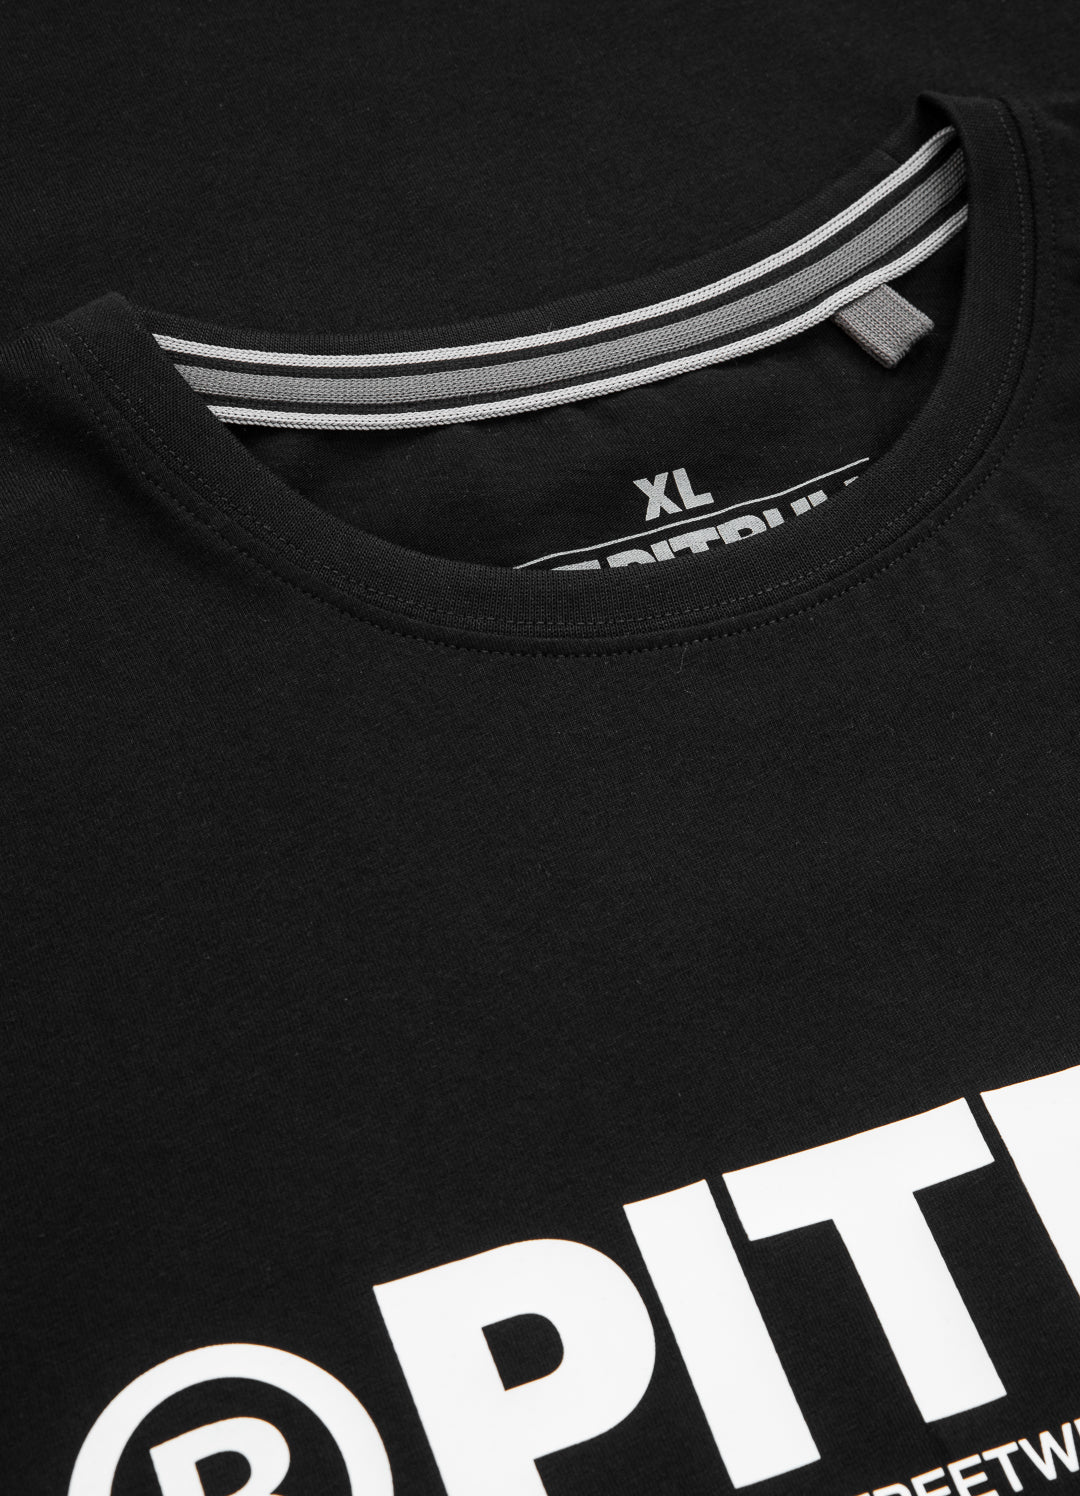 PITBULL R Black T-shirt